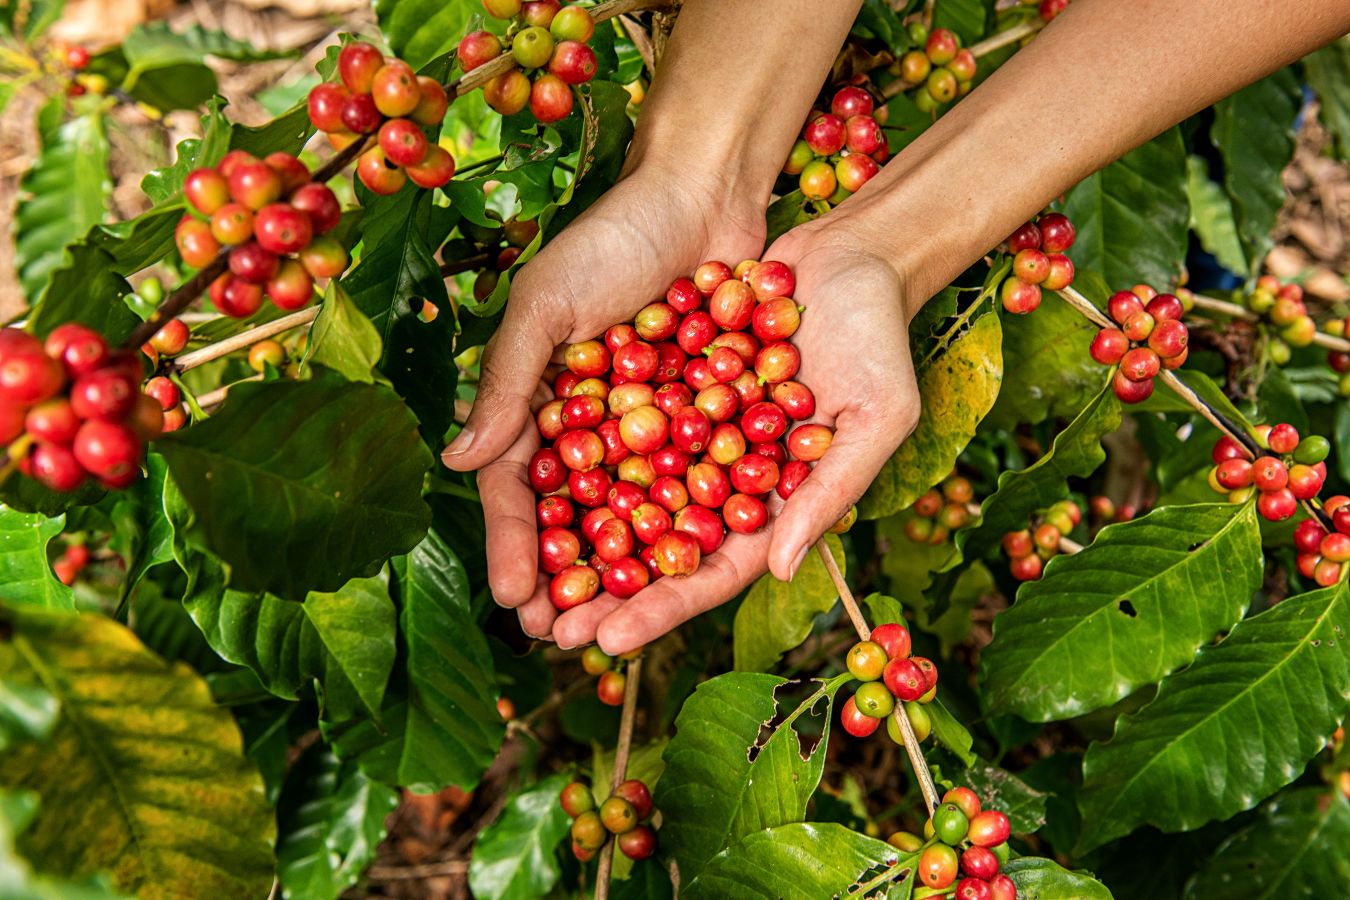 Discover Vietnamese High Quality Arabica Coffee Beans